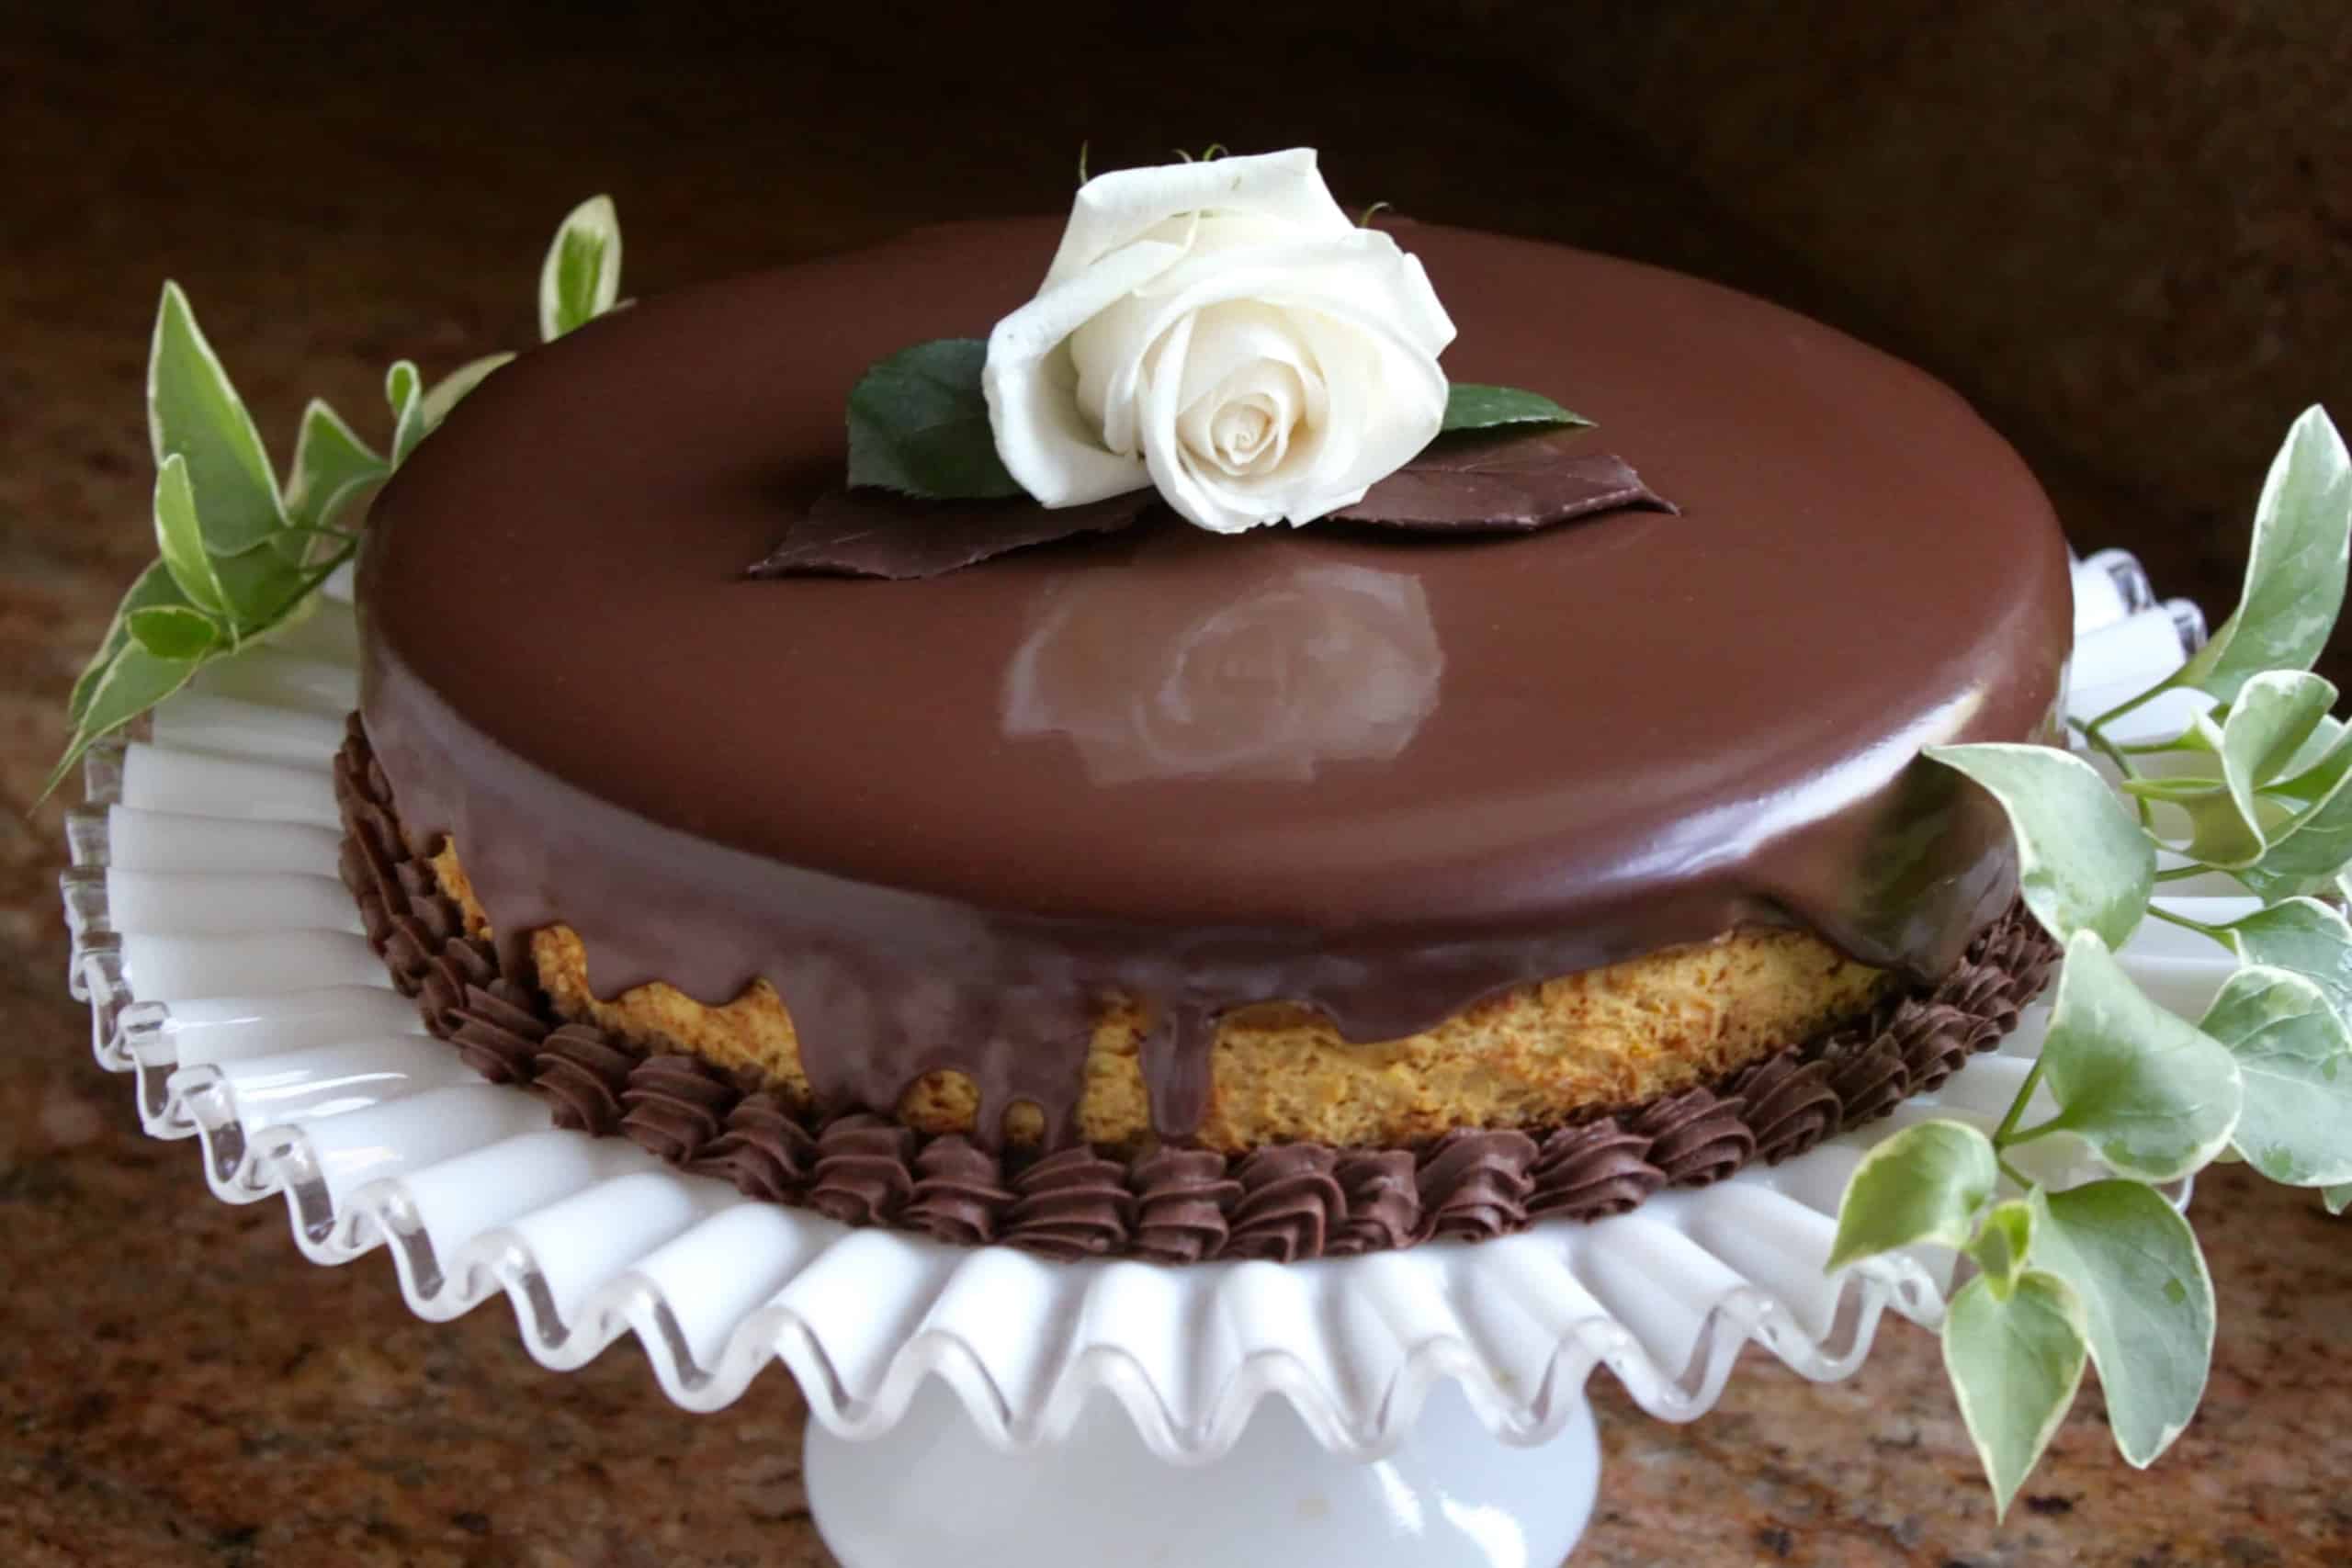 Pumpkin Cheesecake and Chocolate Mousse Topped with Dark Chocolate Ganache - Christina Cucina